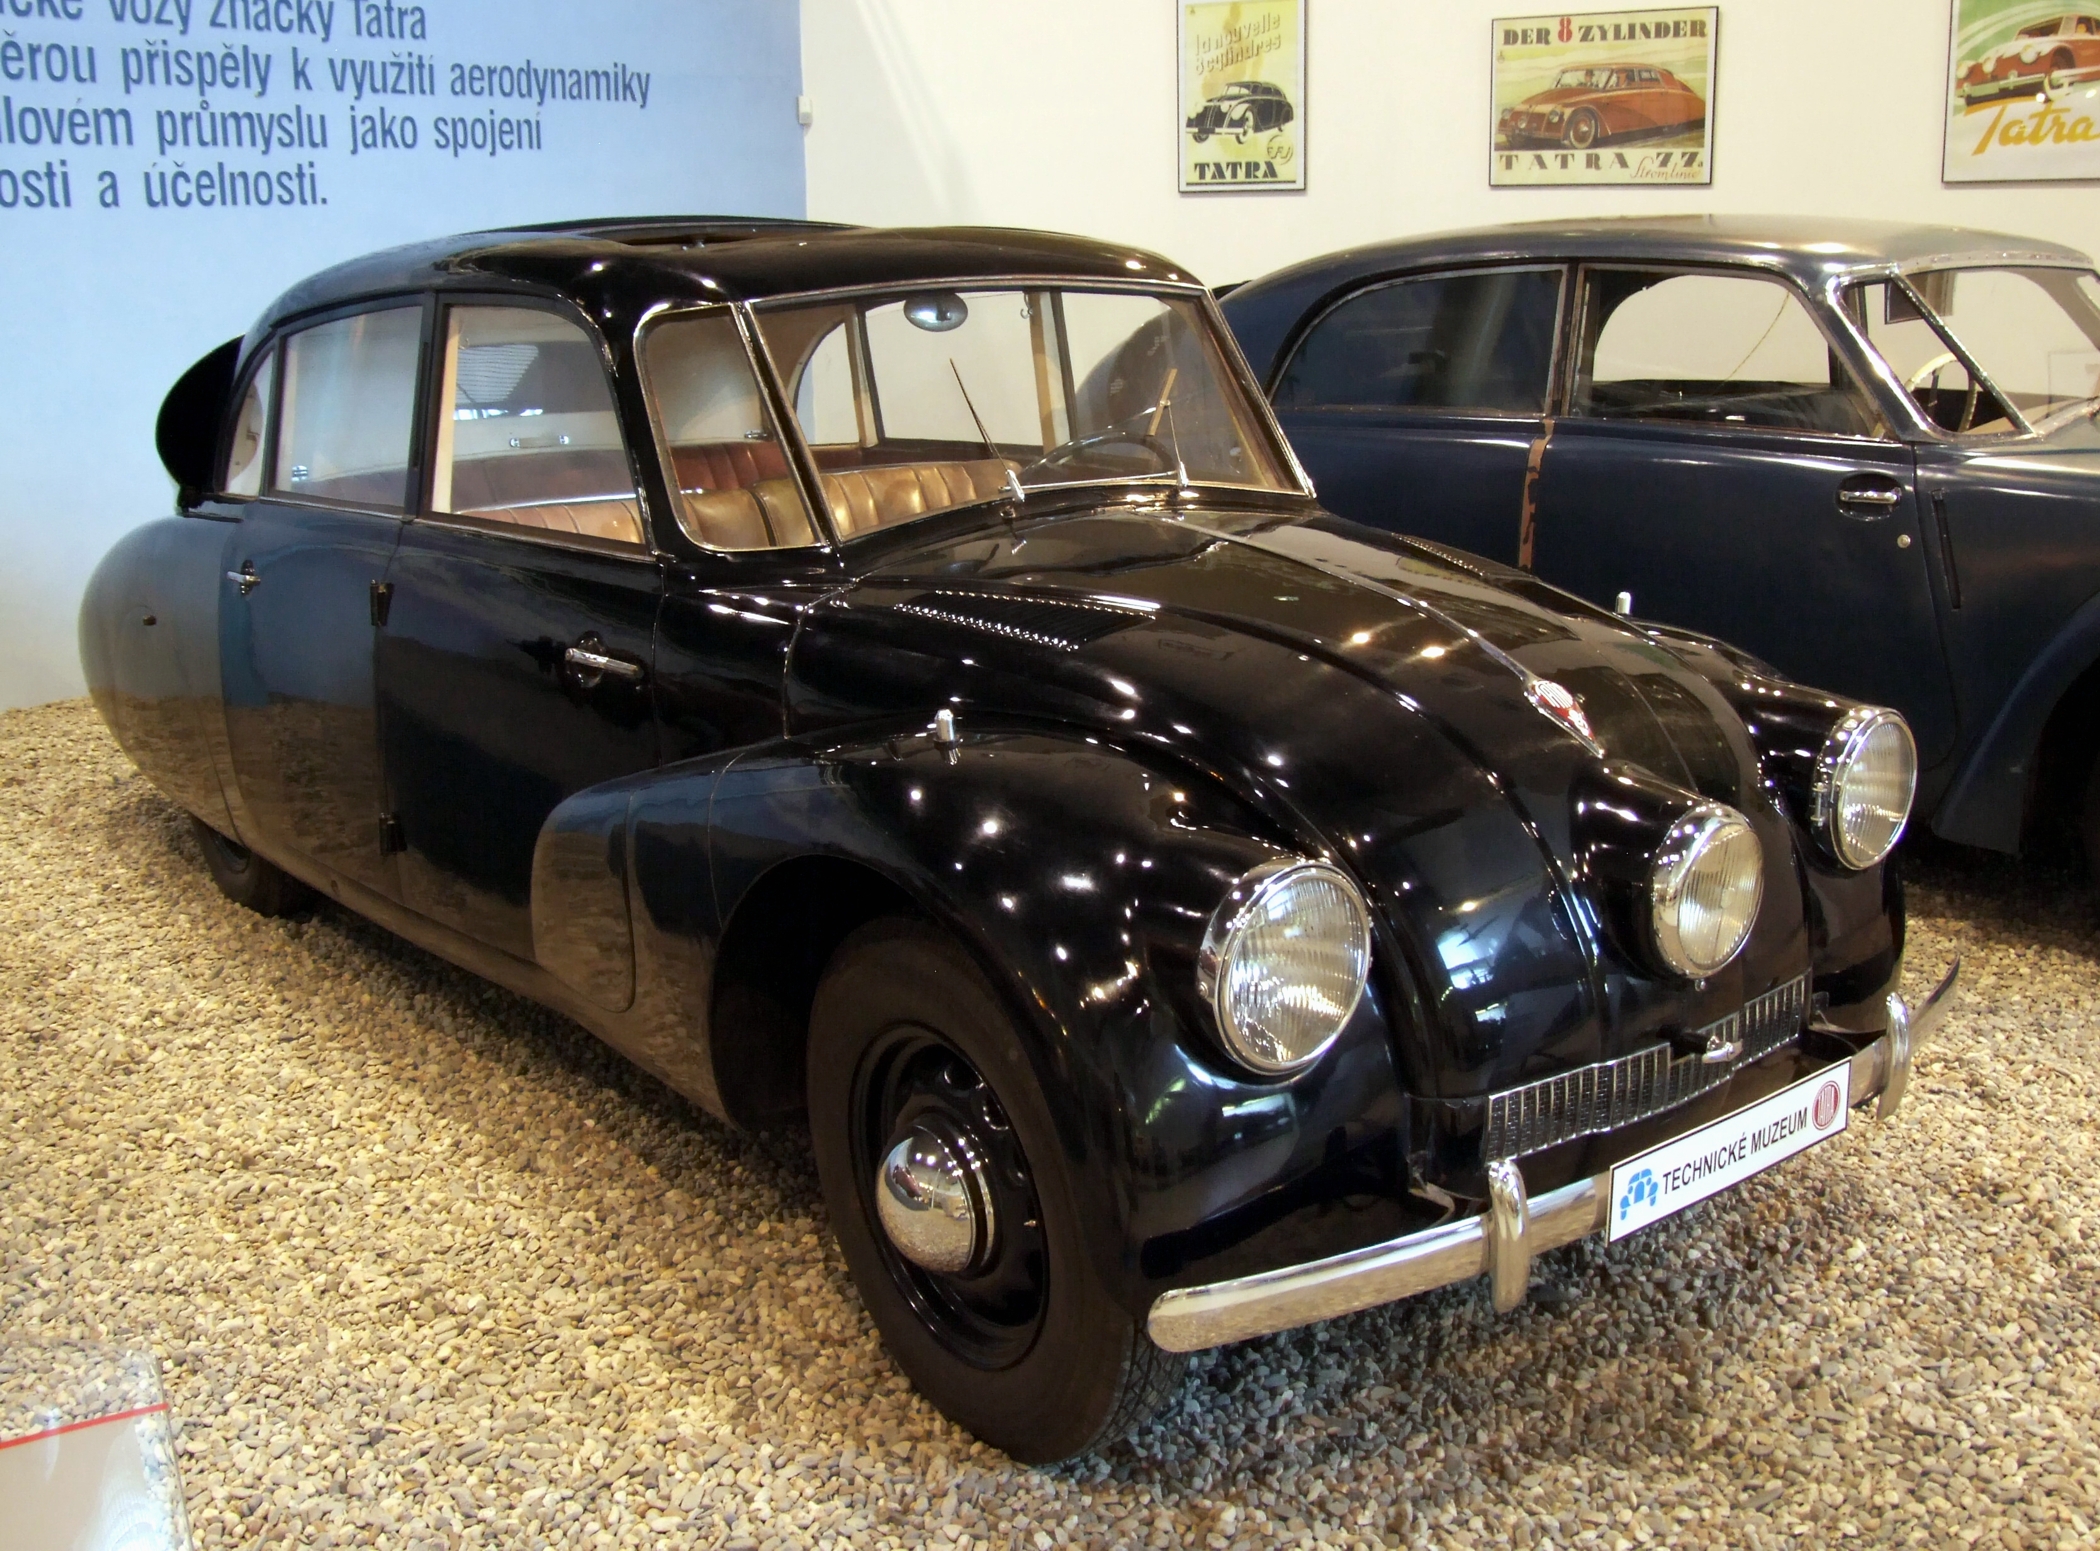 Tatra 87 Kopřivnice